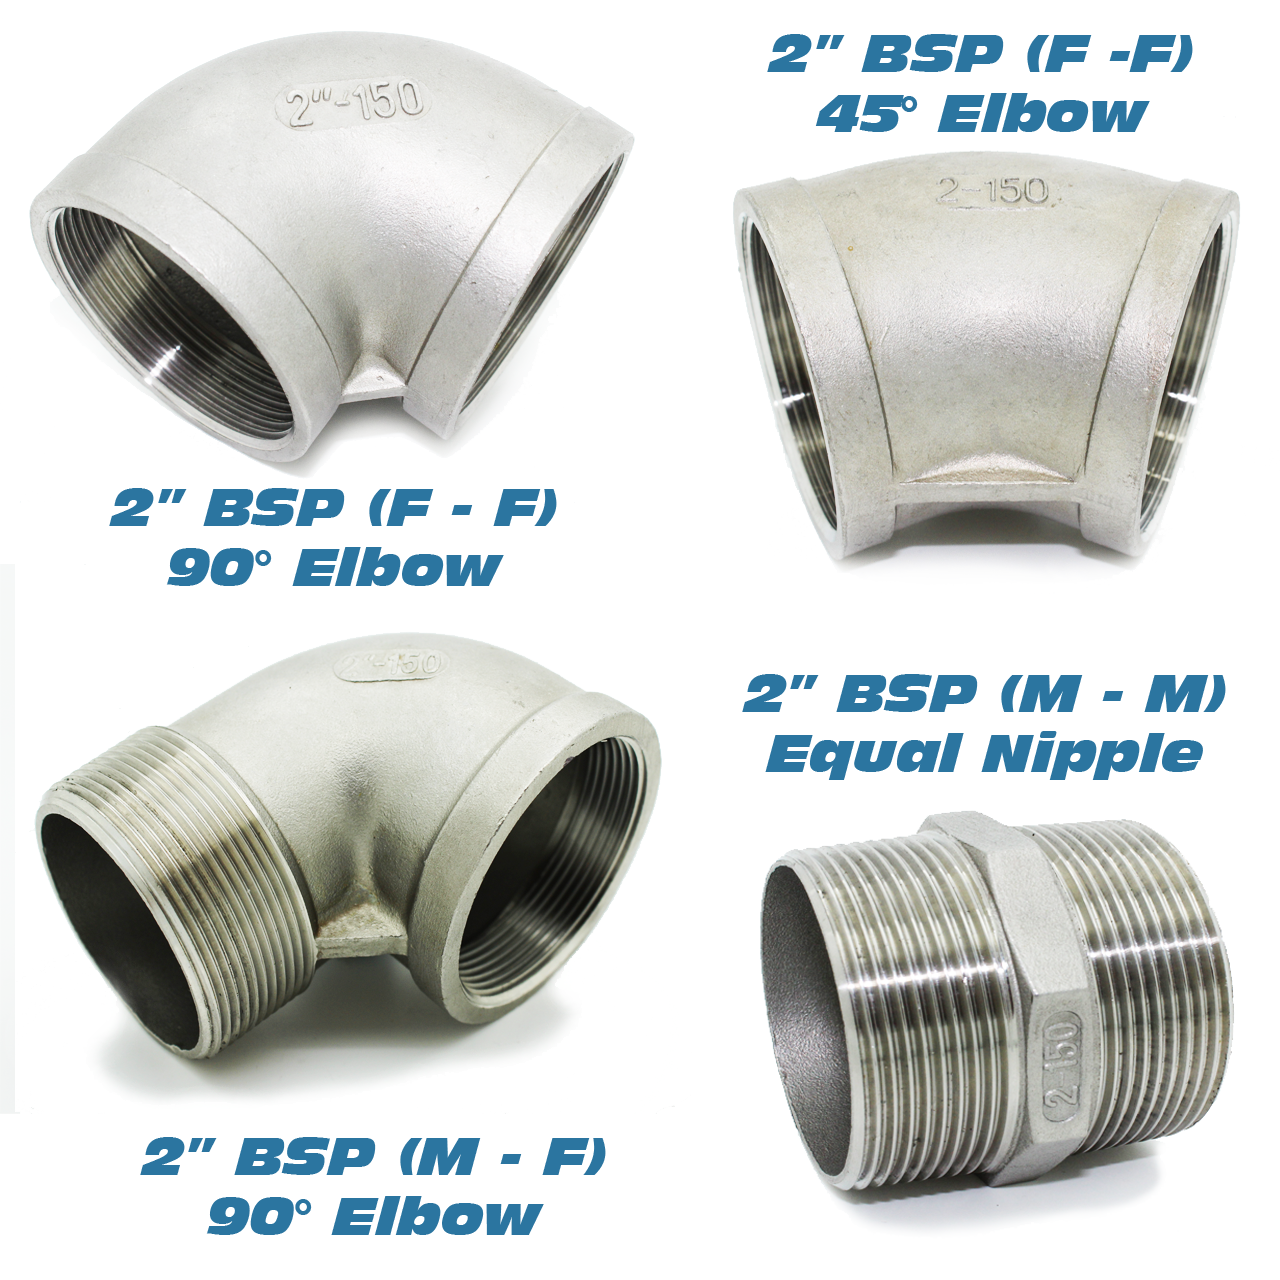 2" BSP Stainless Steel Pipe Fittings - Atkinson Equipment Ltd